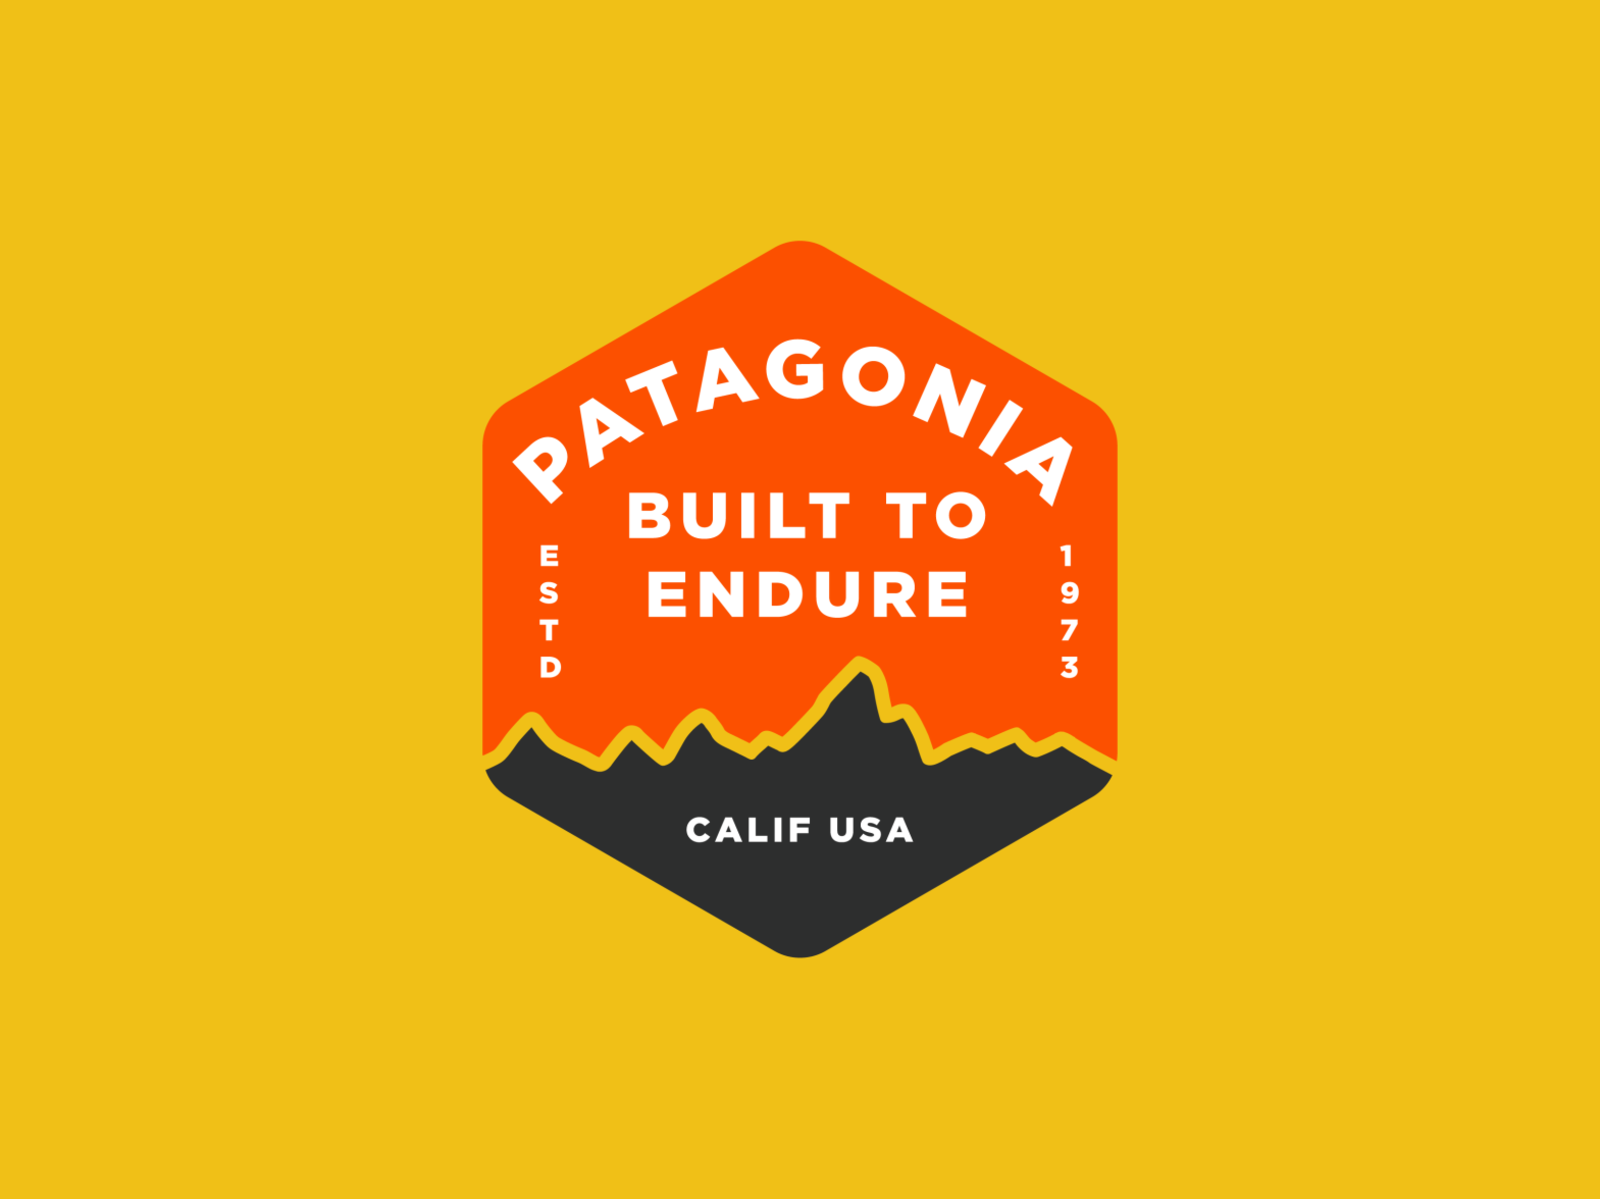 Patagonia badge by Josh Warren on Dribbble